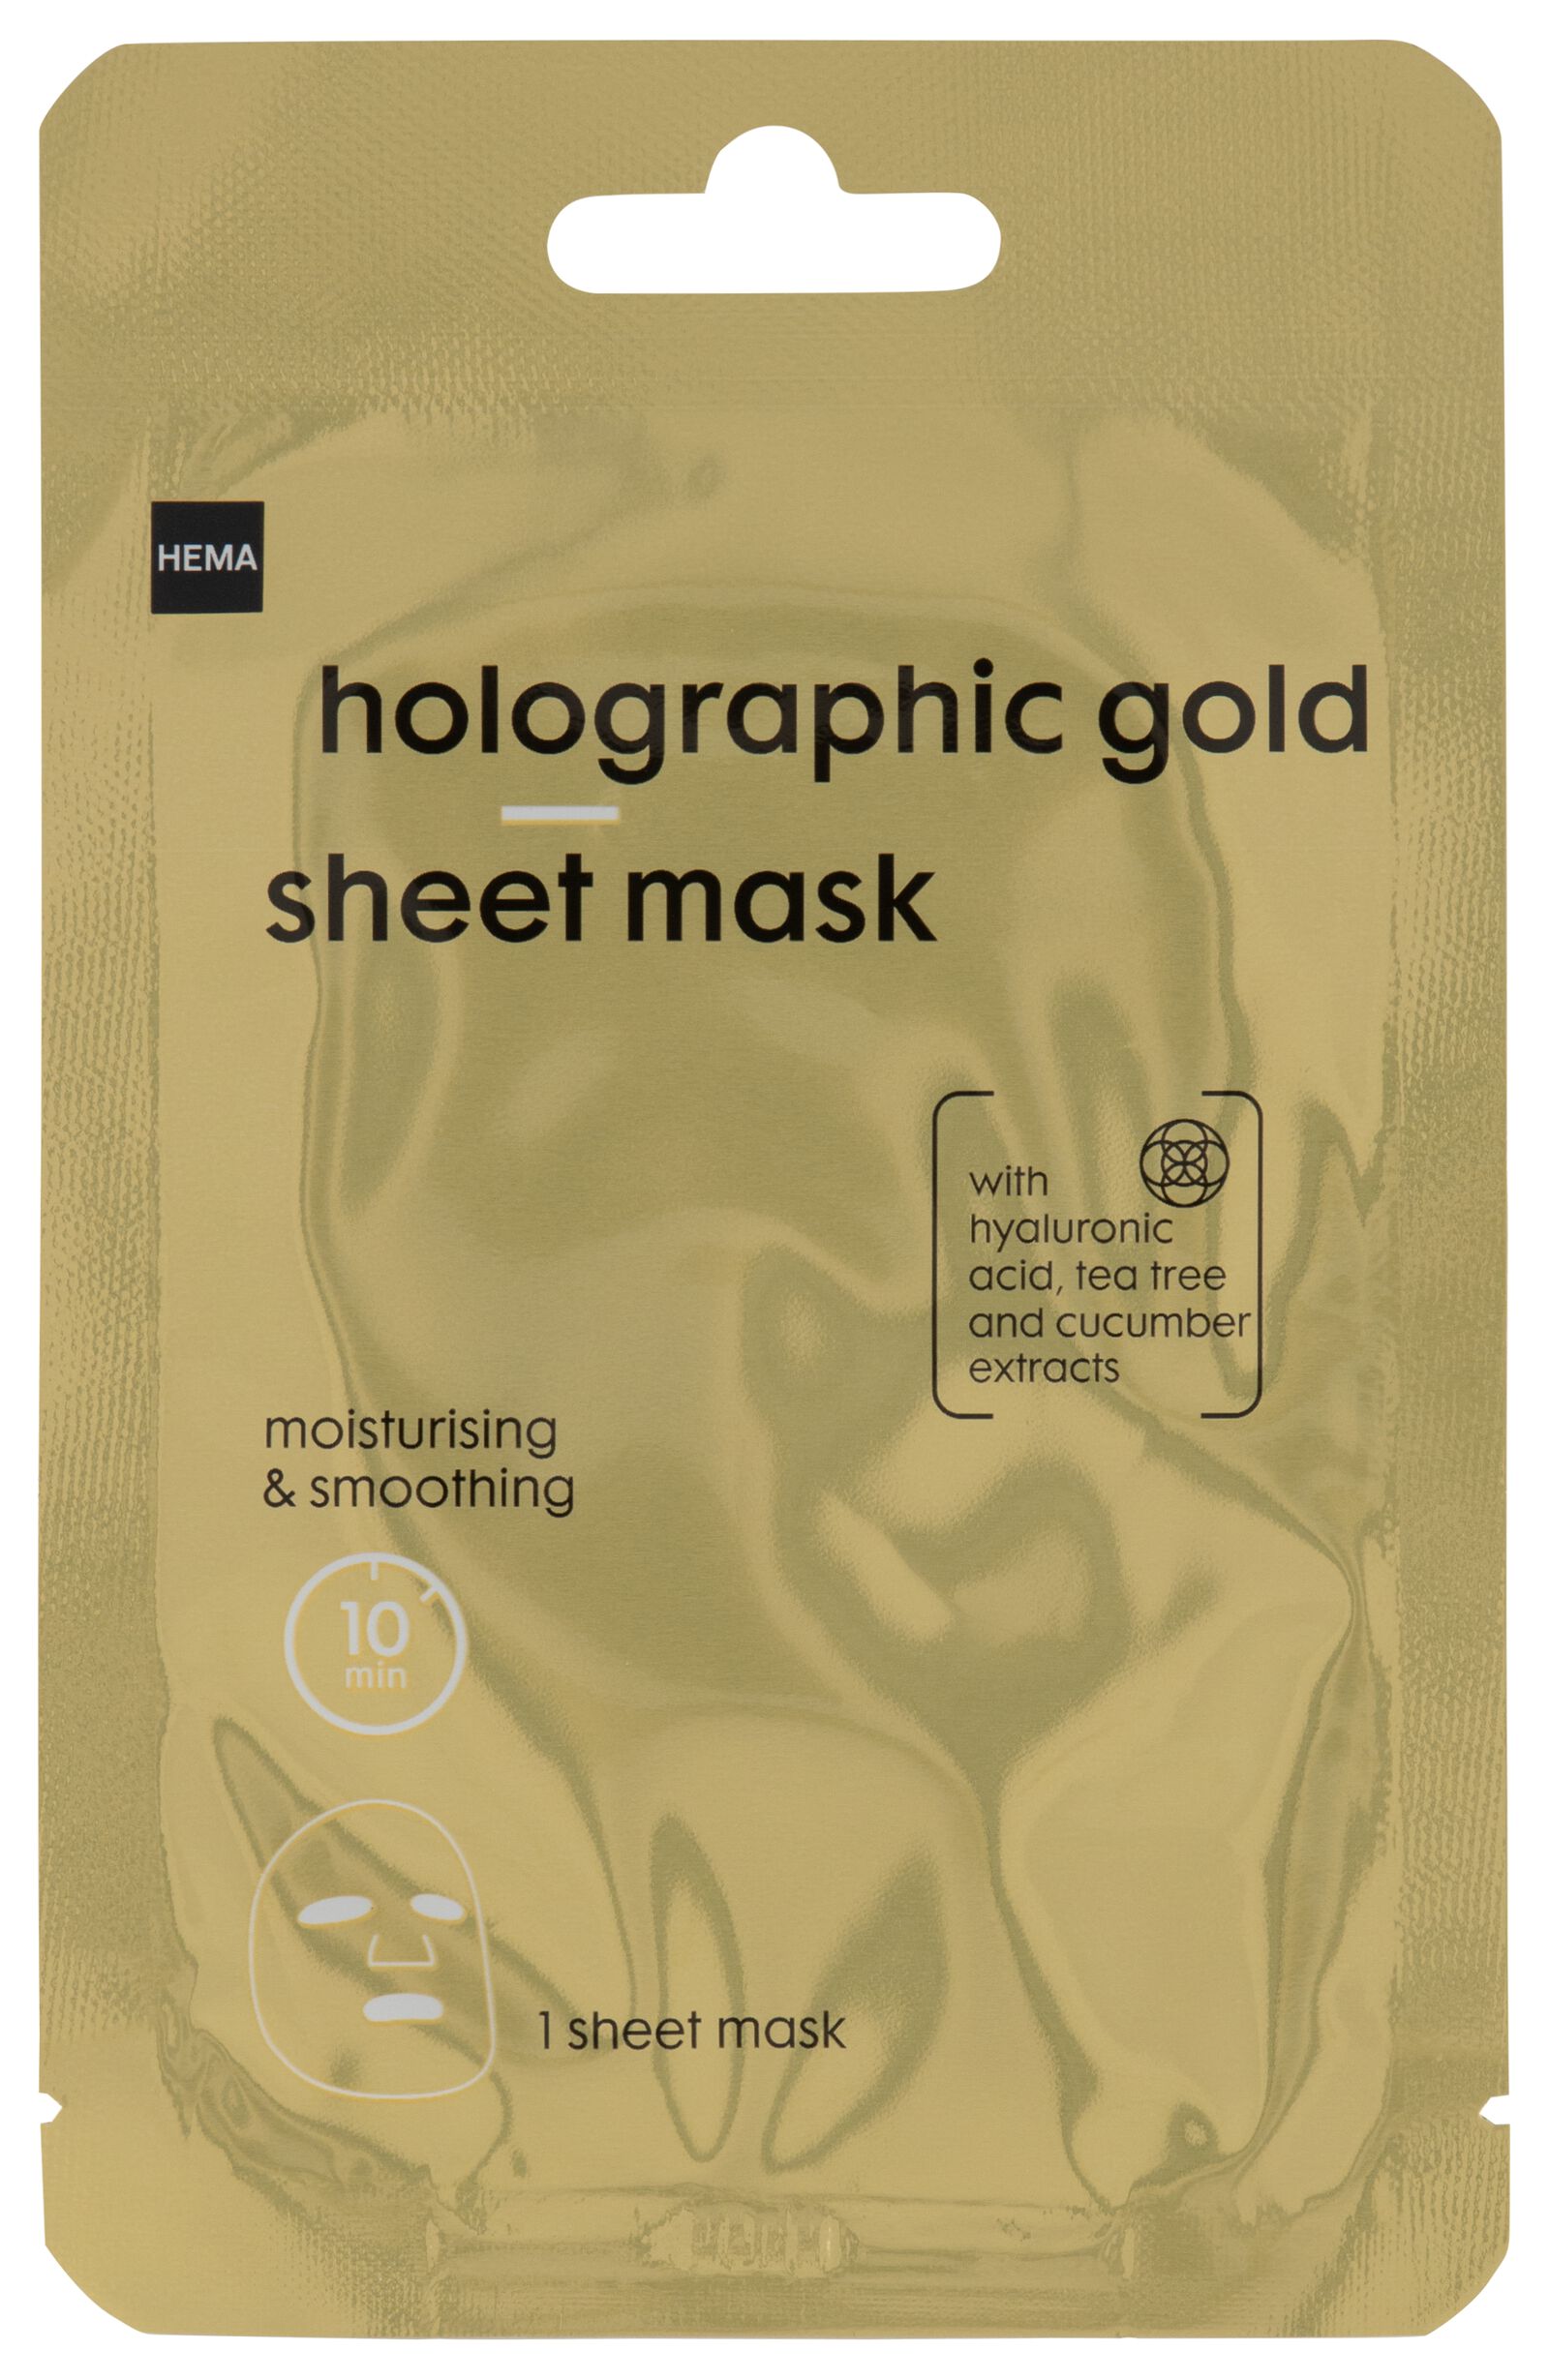 goudkleurig holografisch gezichtsmasker - 17800031 - HEMA